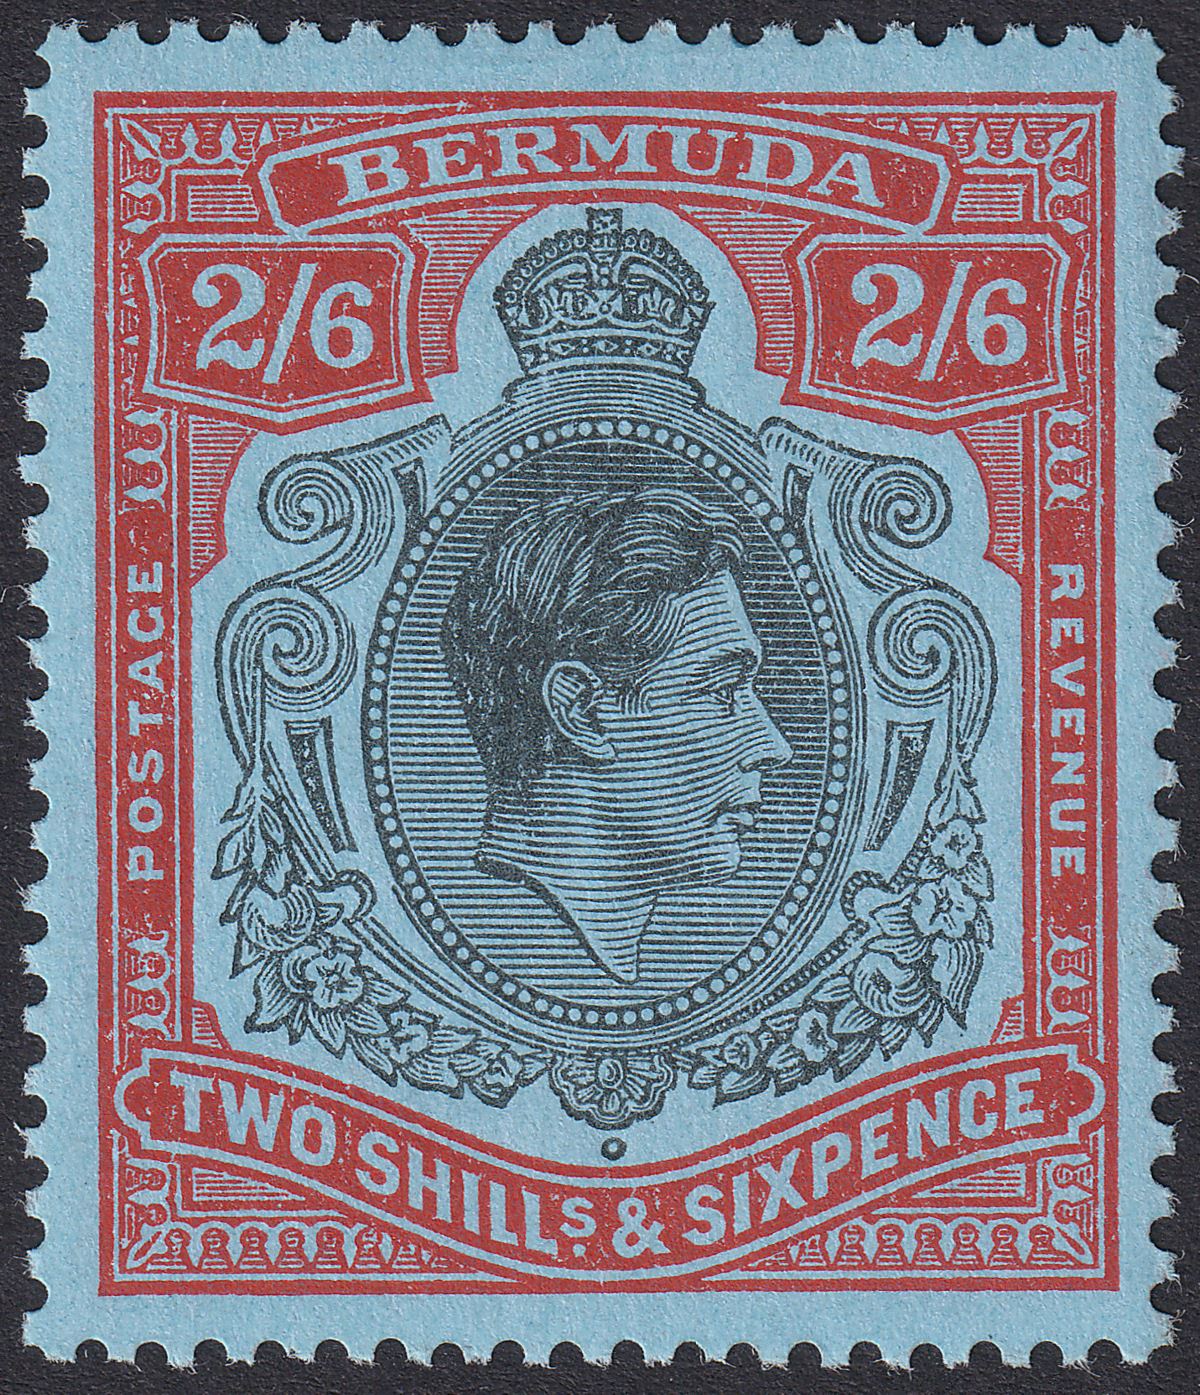 Bermuda 1952 KGVI 2sh6d Black and Carmine-Red on Pale Blue p13 Mint SG117d